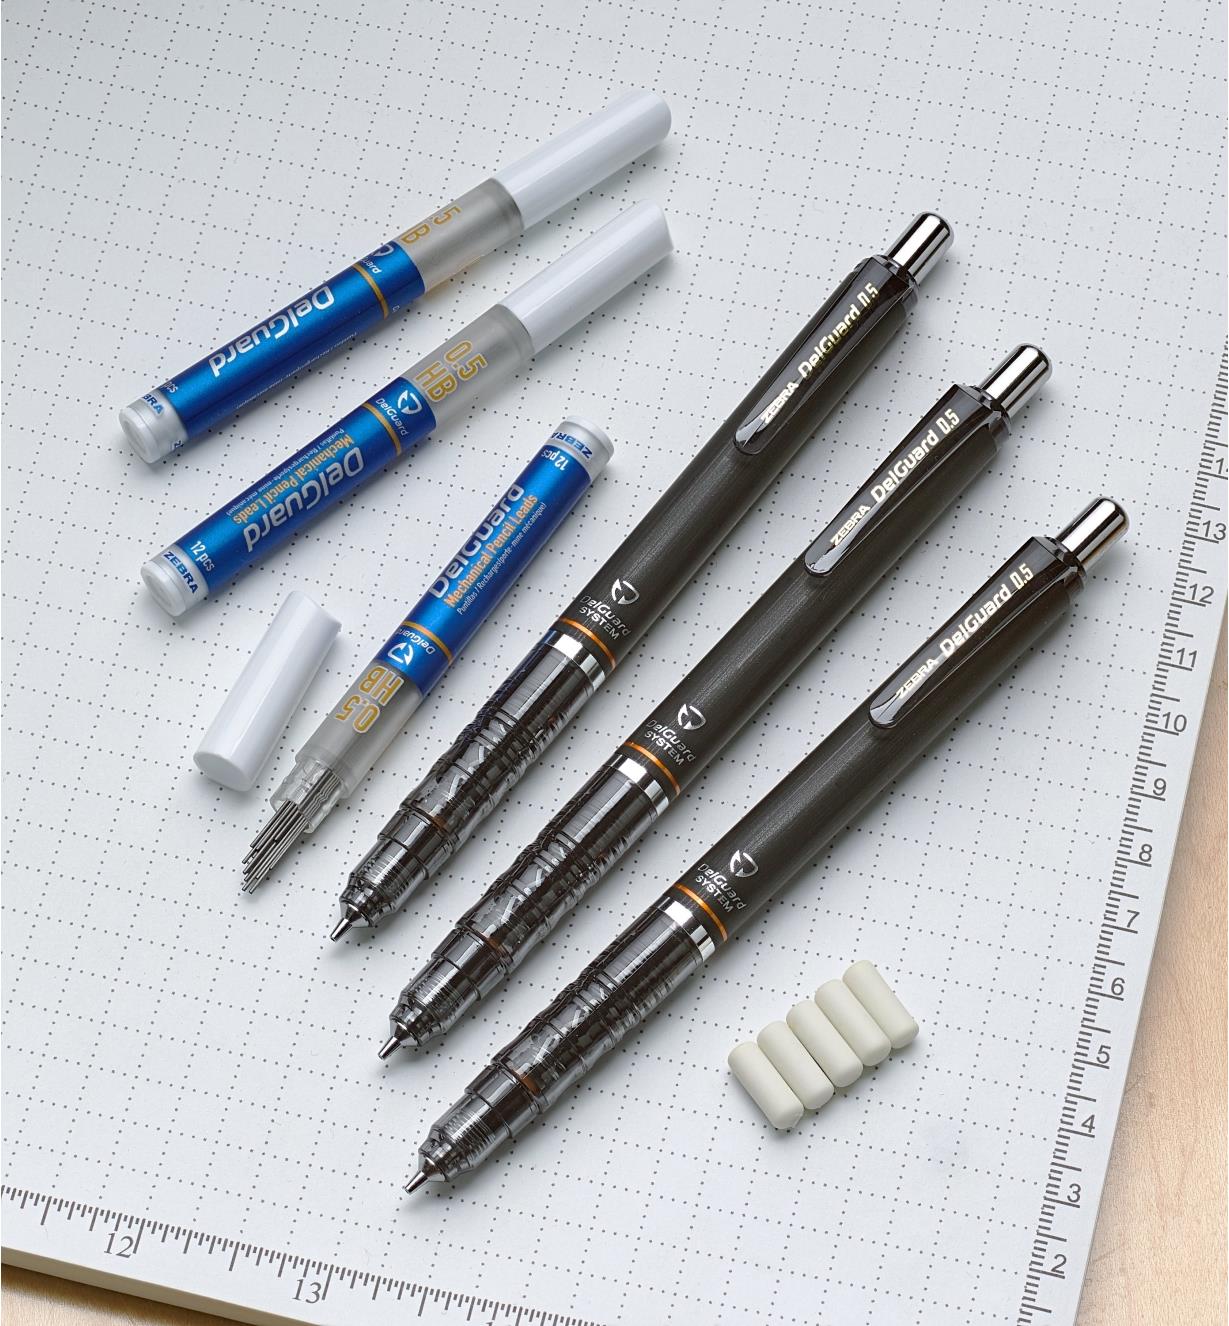 Lee Valley Pencils - Lee Valley Tools